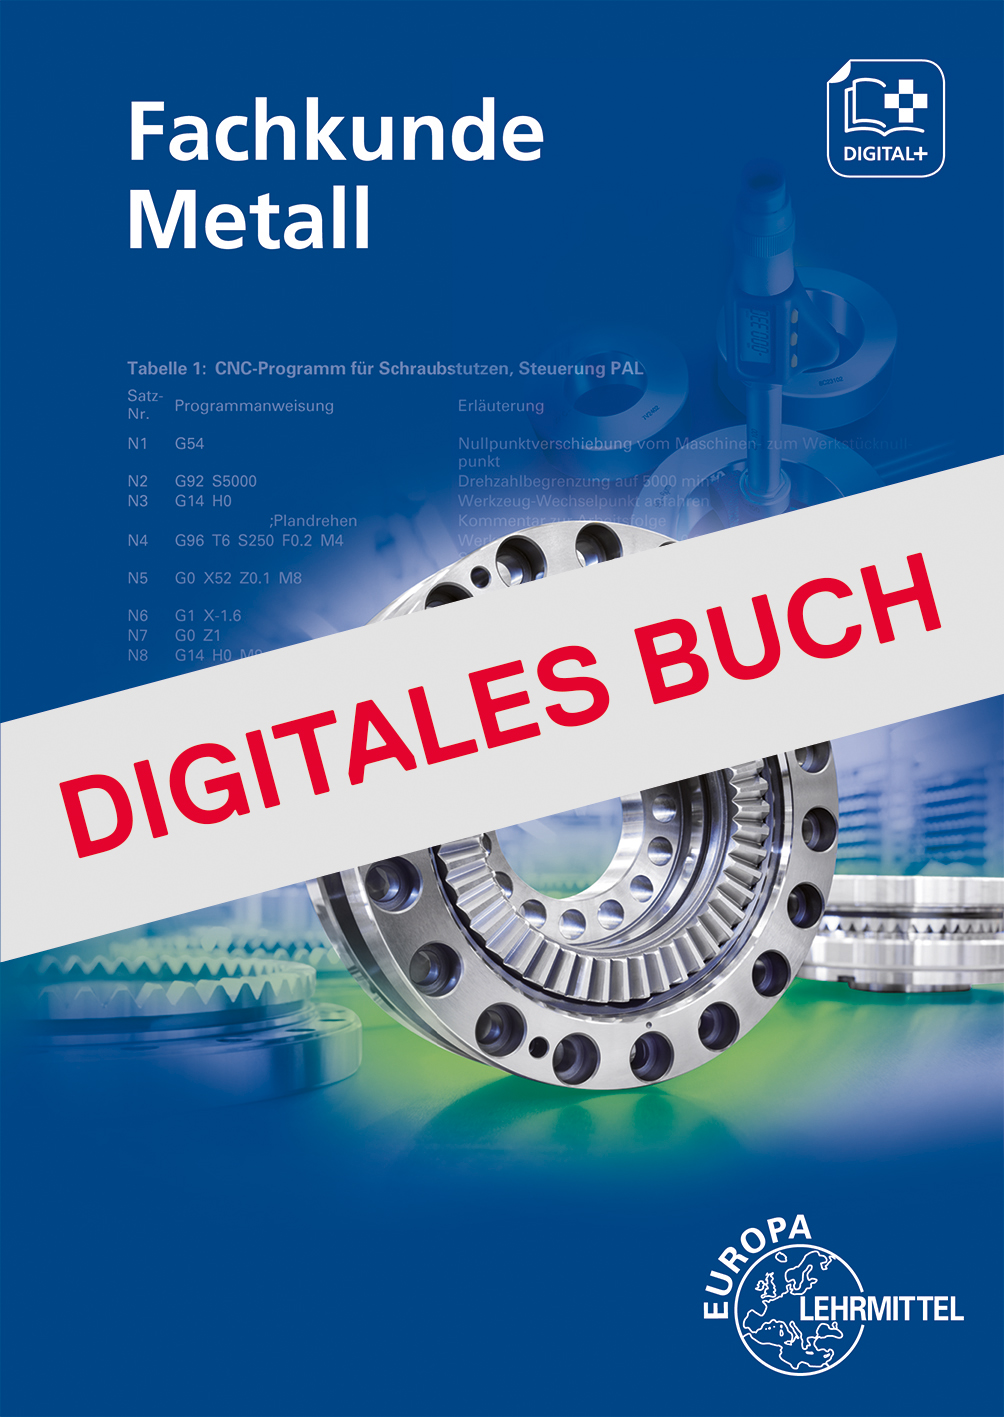 Fachkunde Metall - Digitales Buch